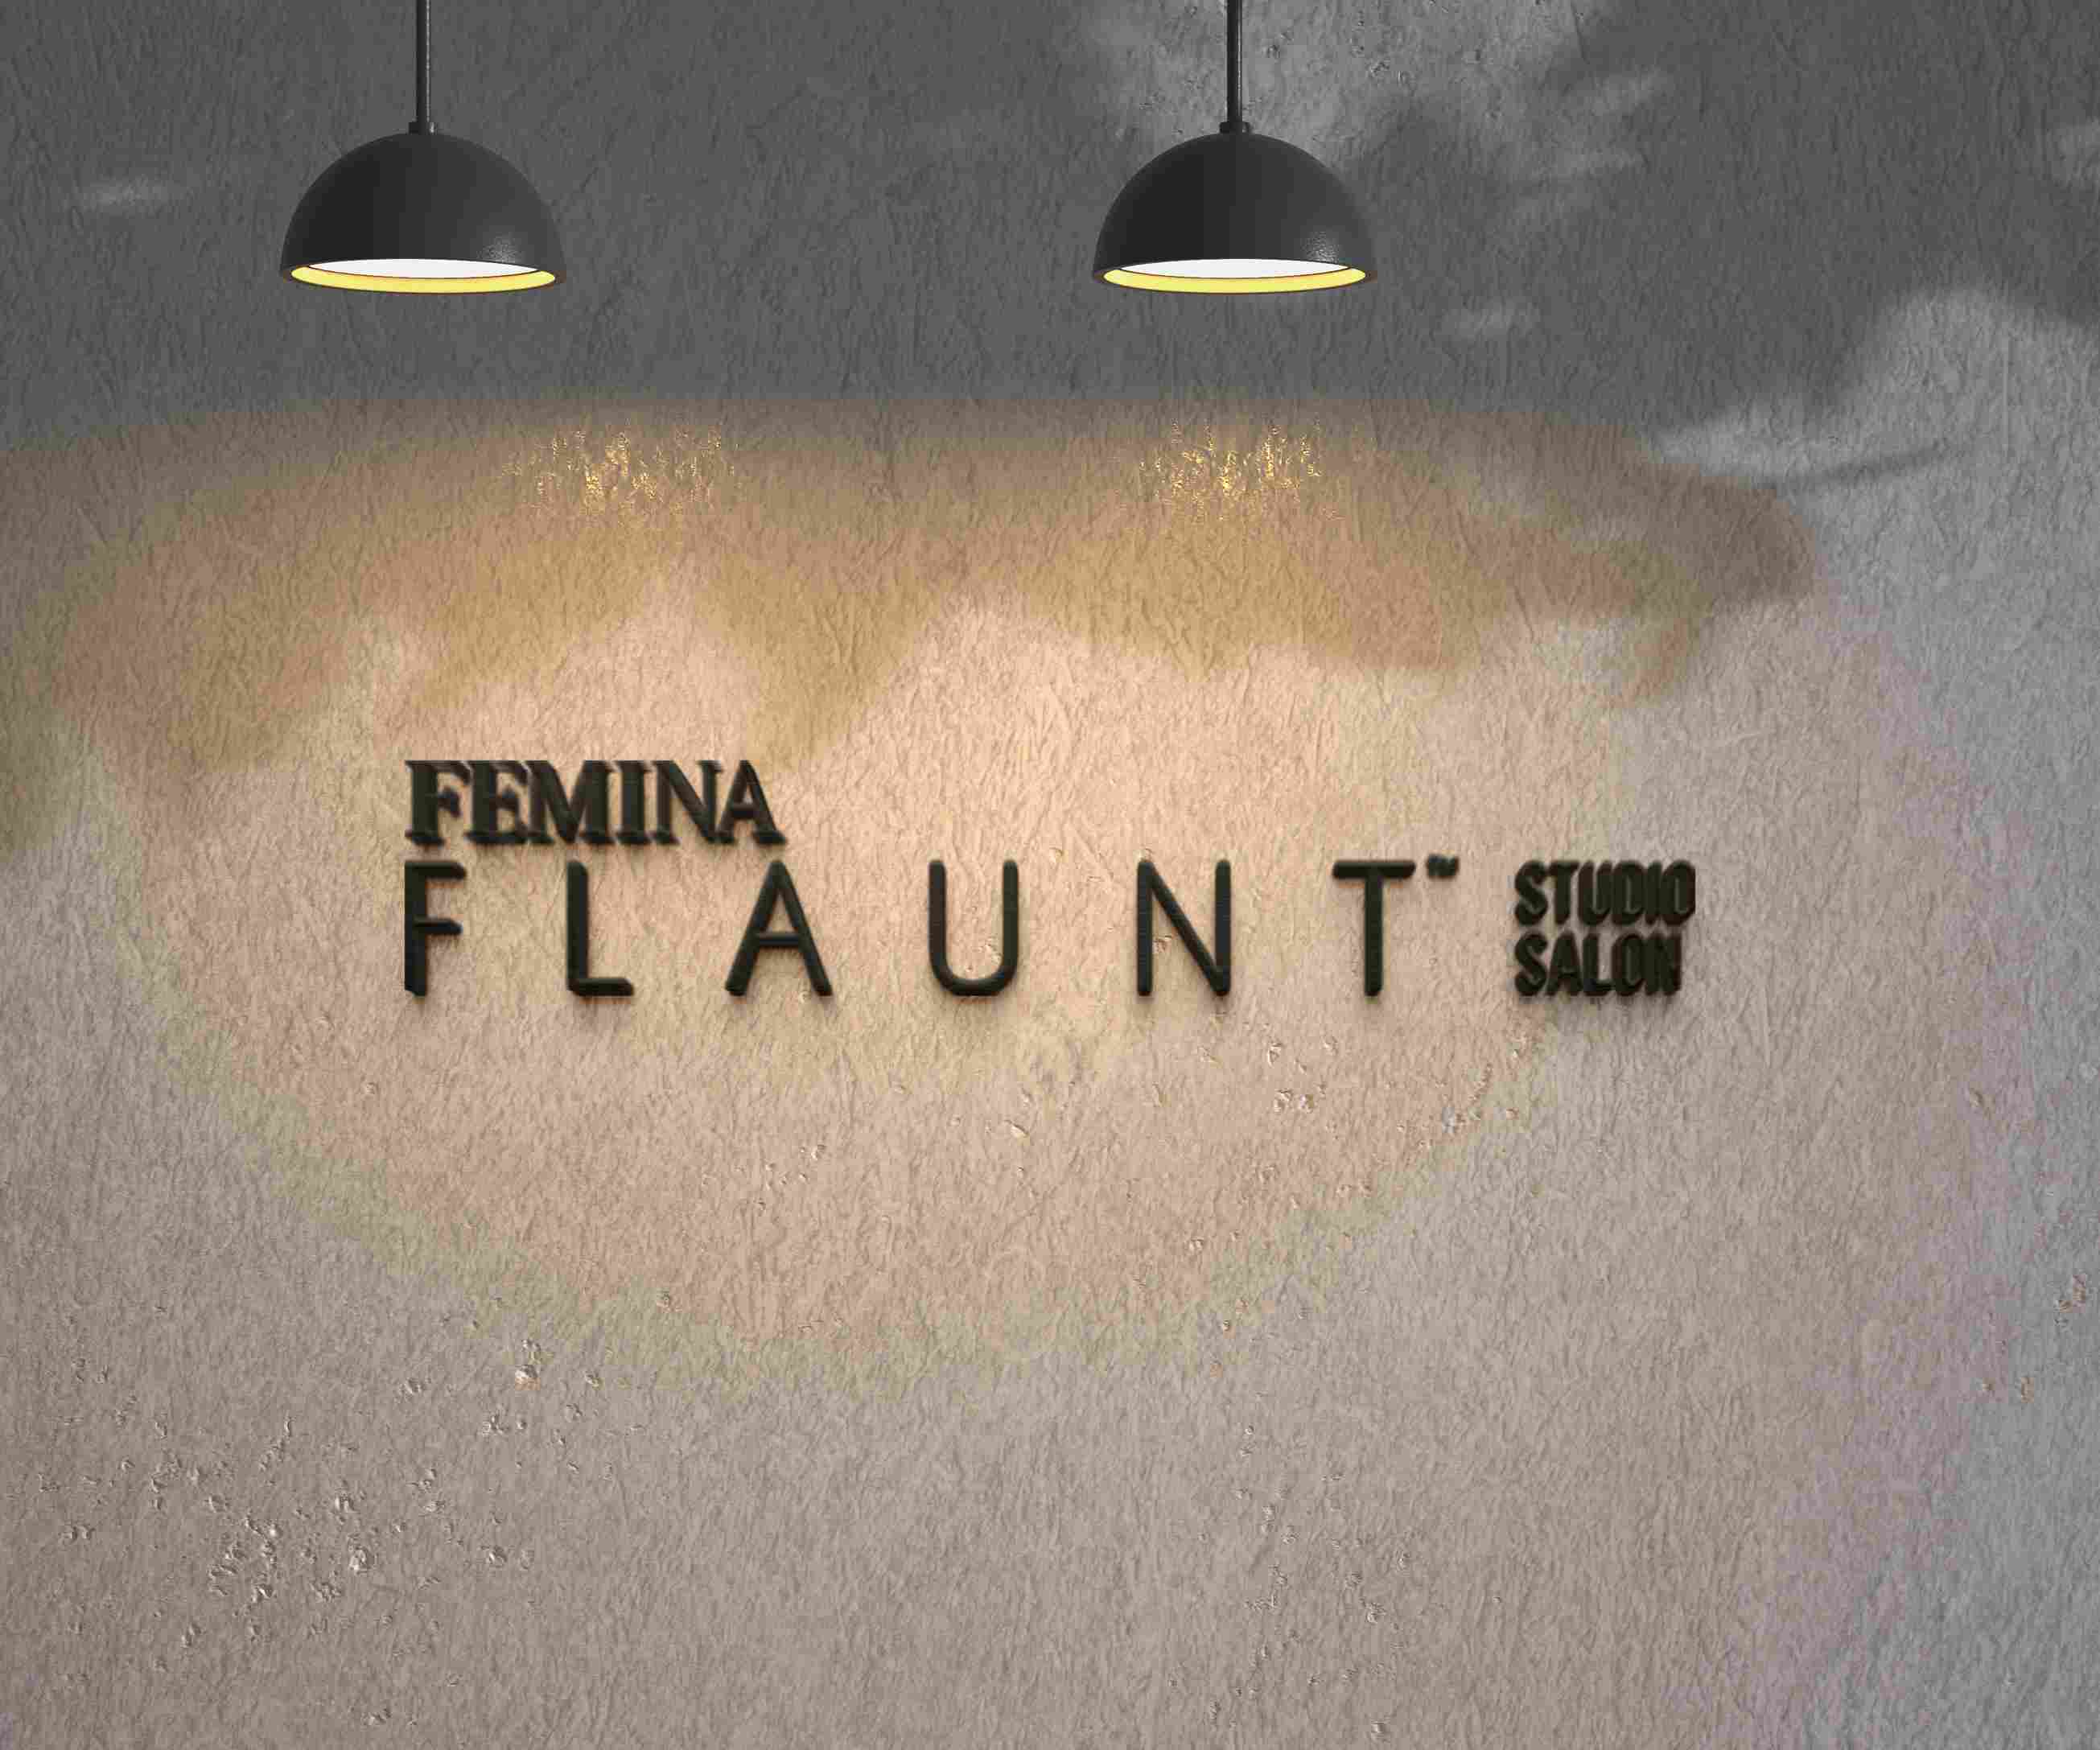 Femina Flaunt Studio Salon